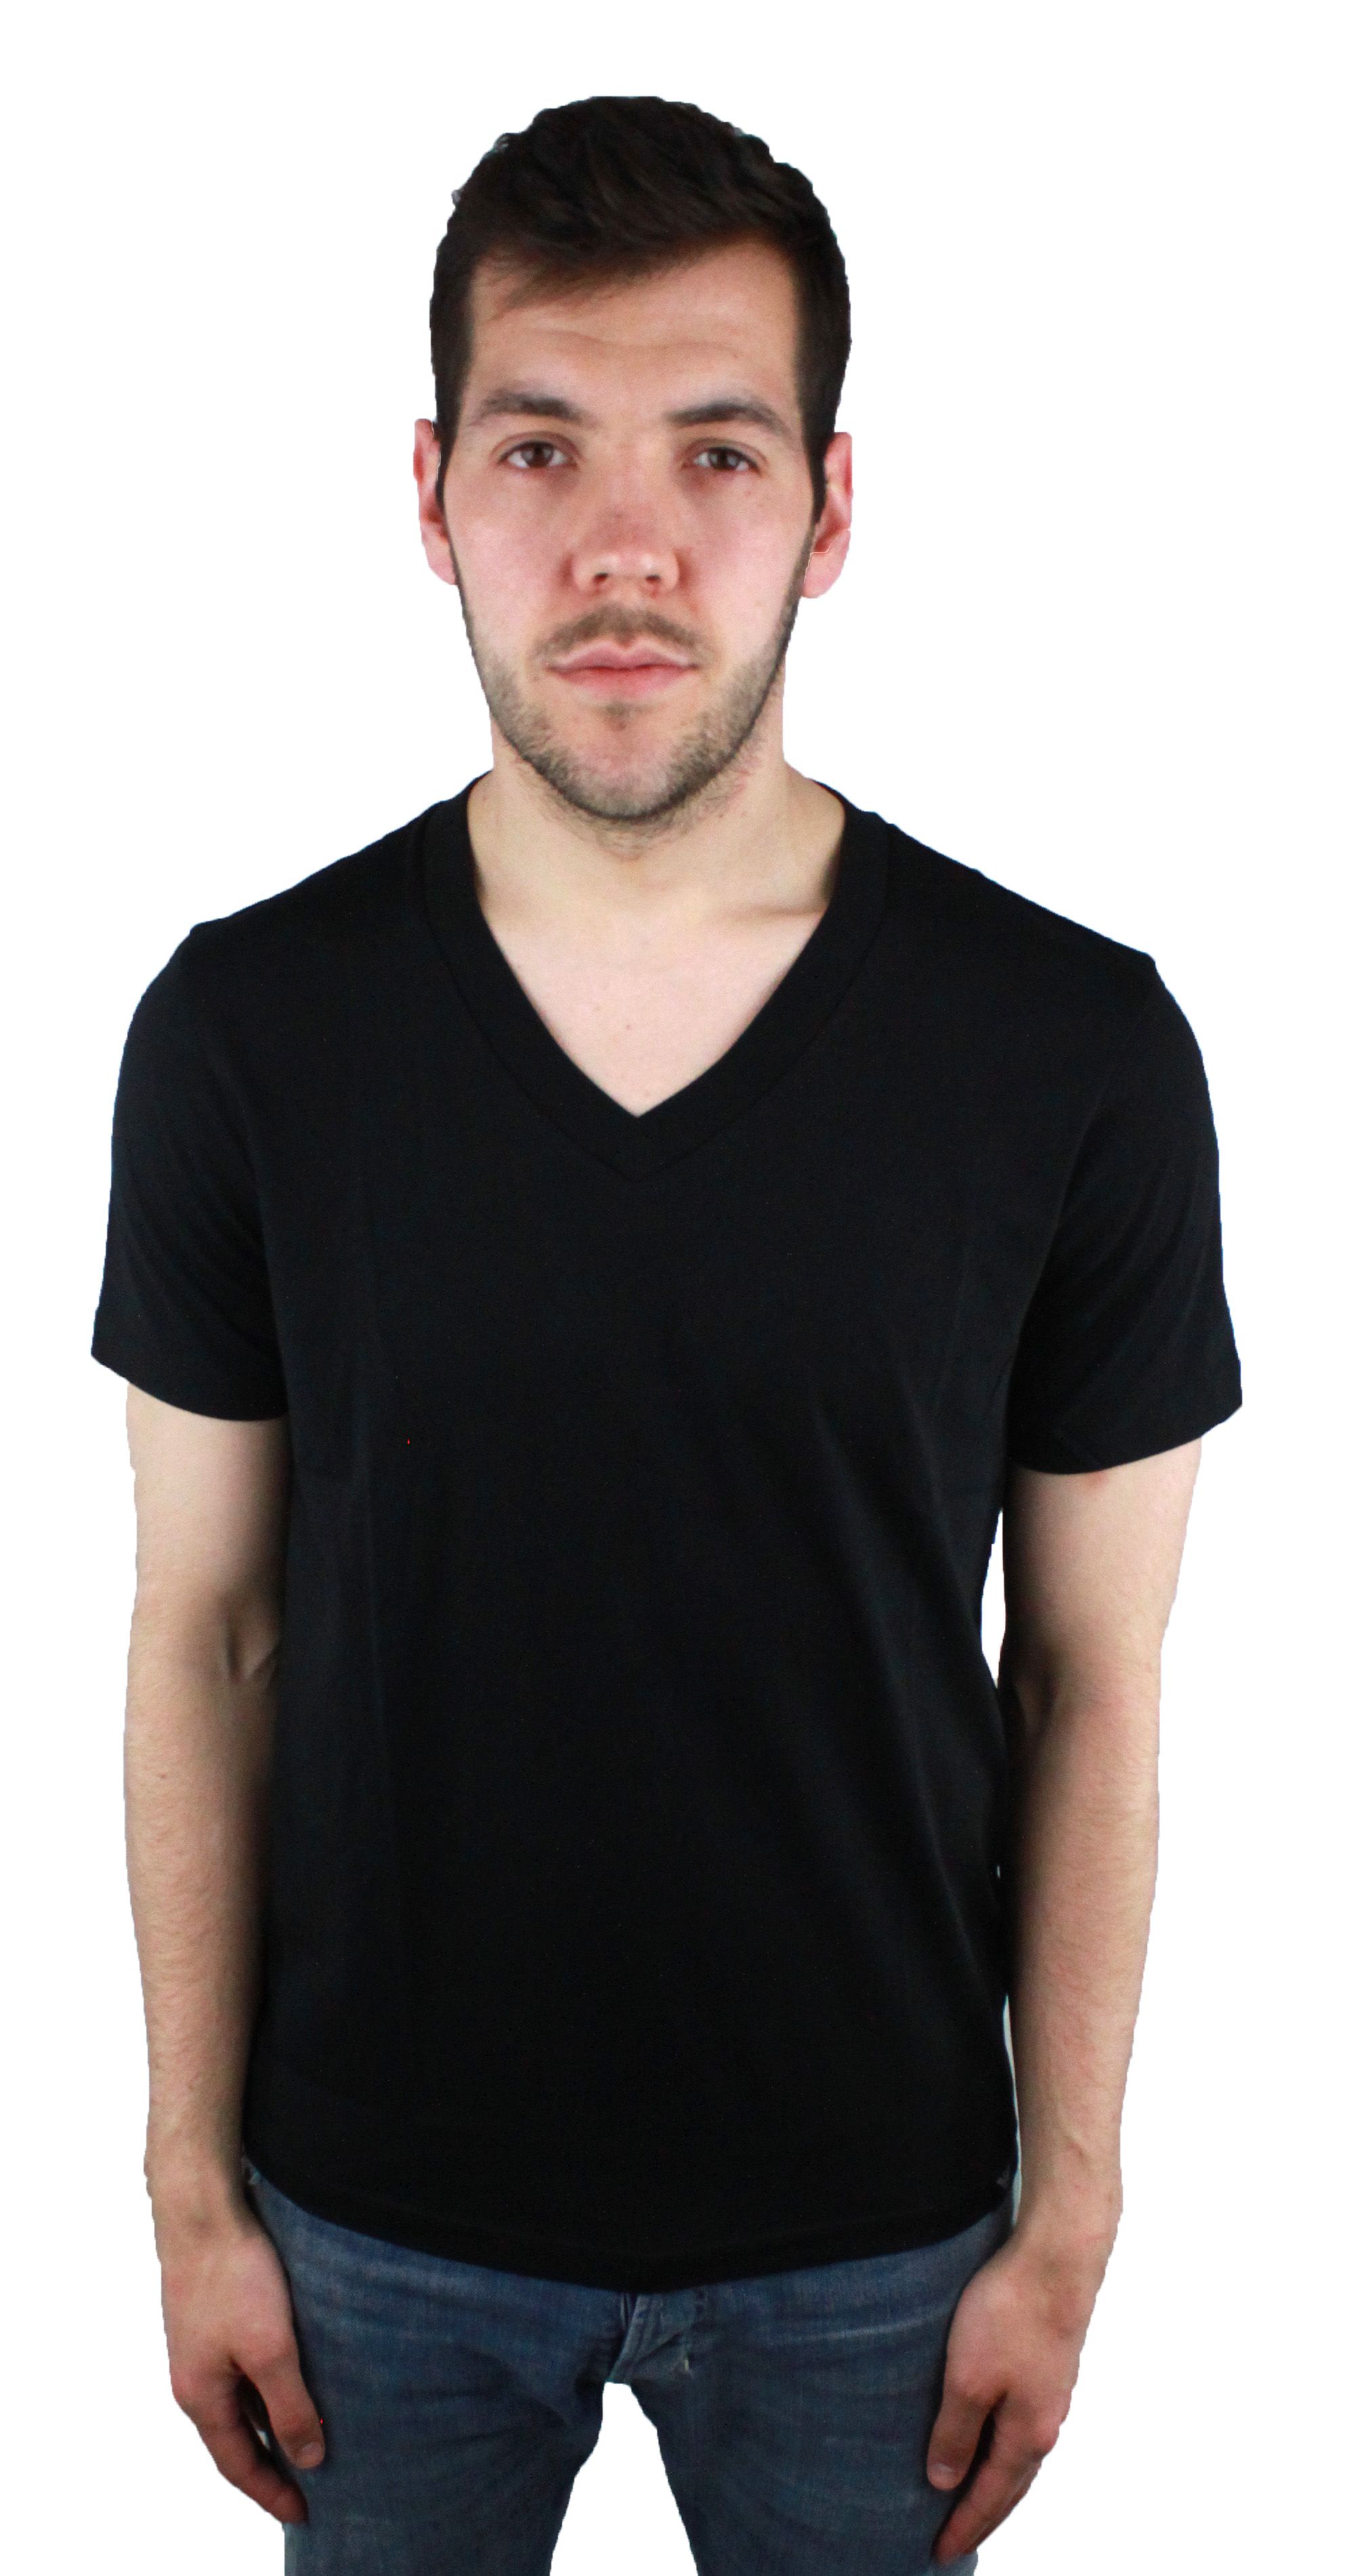 Emporio Armani 3Z1T77 Black T-Shirt. Short Sleeved Black T-Shirt. Logo On Front Bottom Left. 100% Cotton. Style: 3Z1T77 1JPZZ. Crew Neck